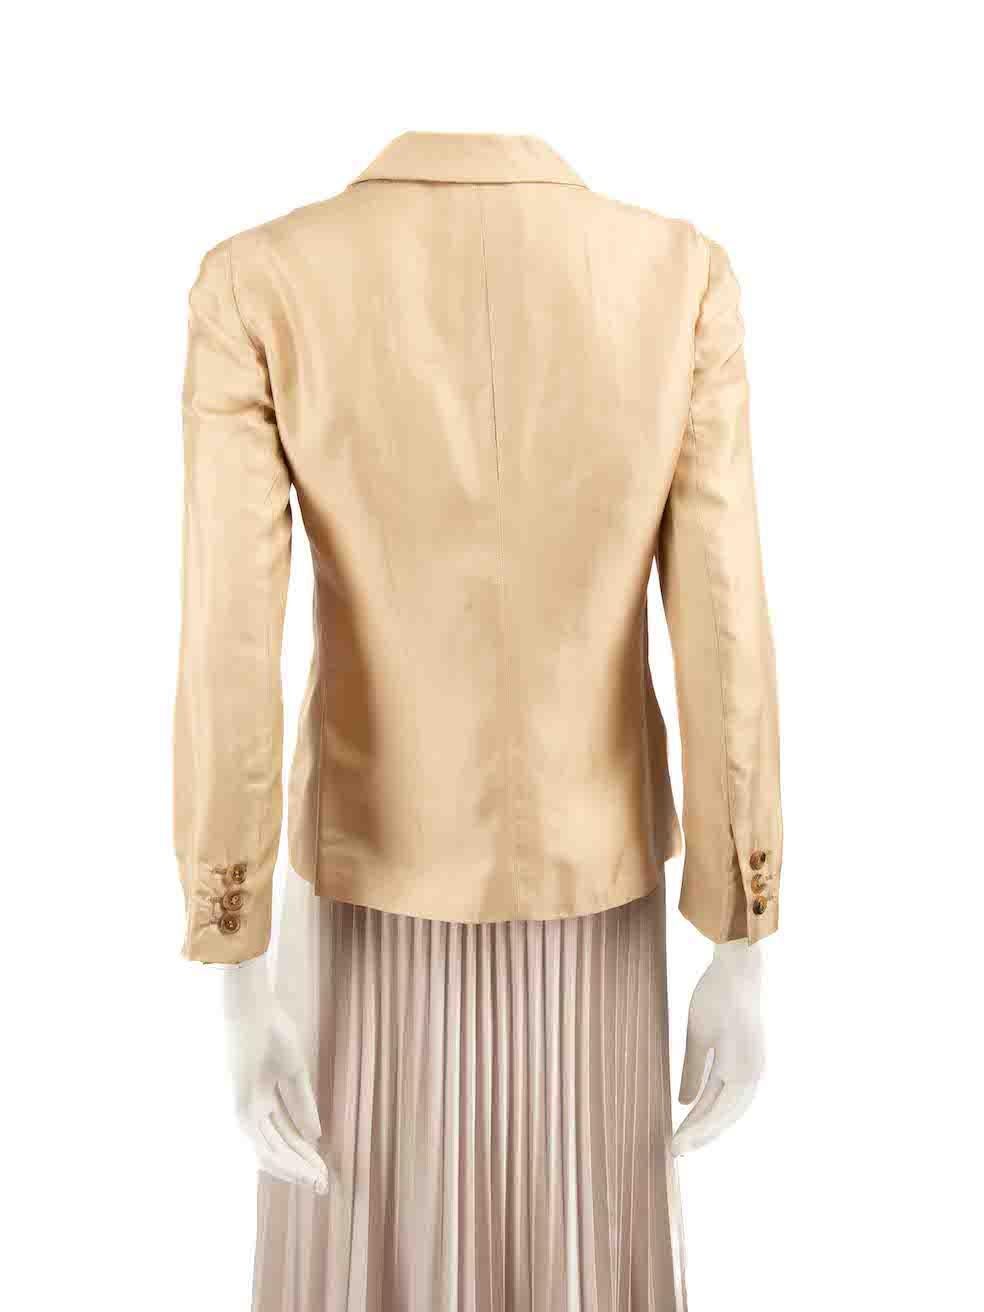 Prada Beige Silk Single Breasted Blazer Jacket Size M In Good Condition For Sale In London, GB